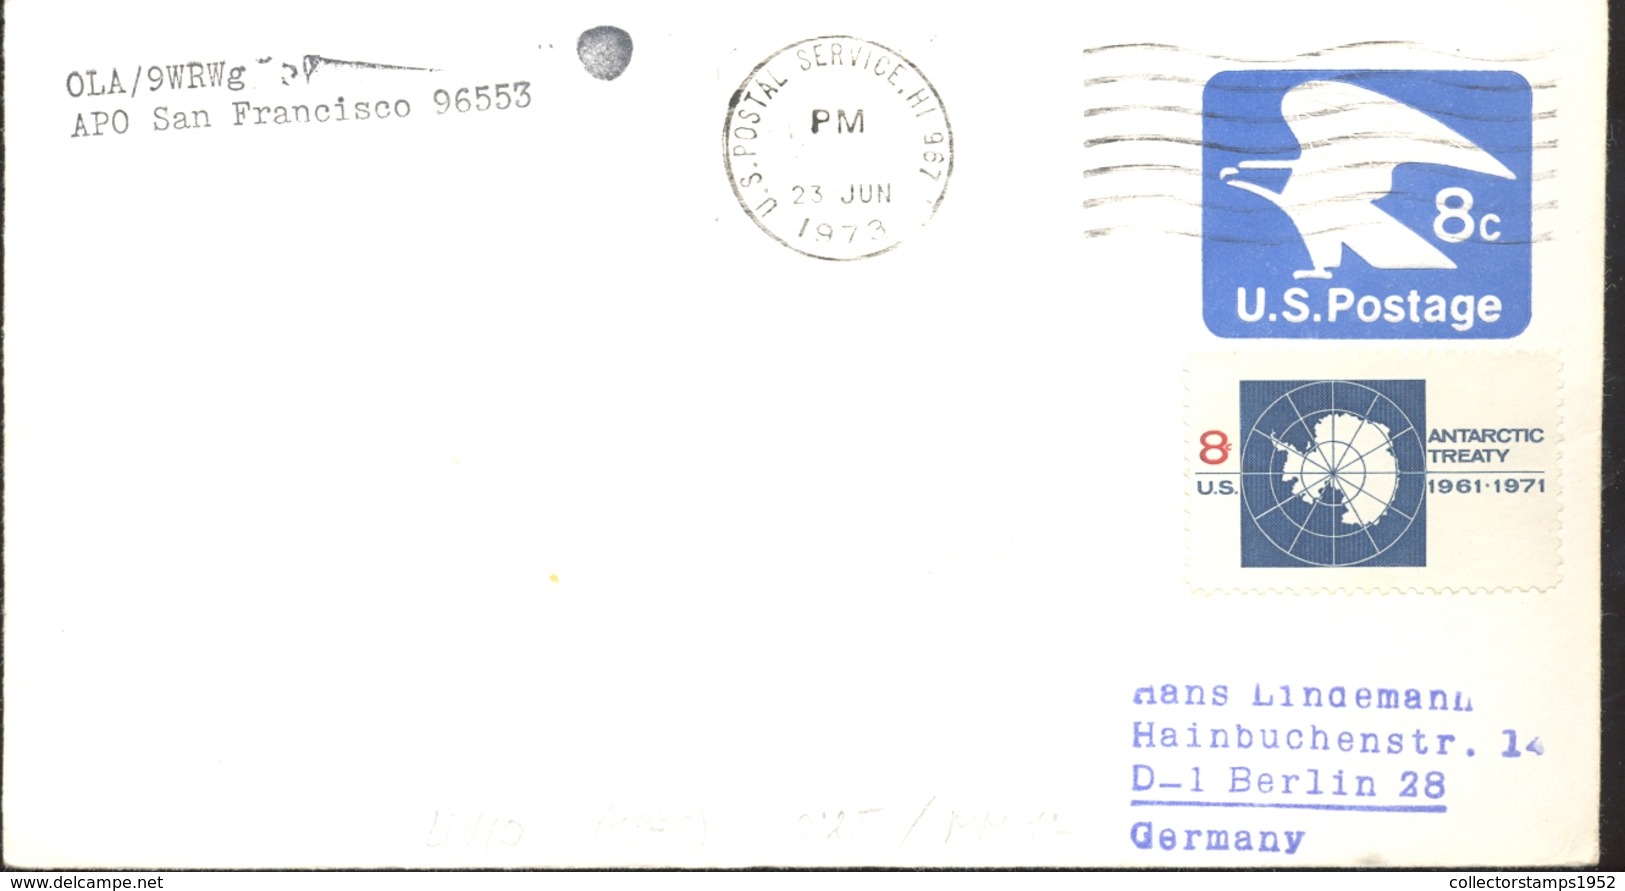 74312- ANTARCTIC TREATY, SOUTH POLE STAMP, EAGLE EMBOISED COVER STATIONERY, 1973, USA - Antarctic Treaty